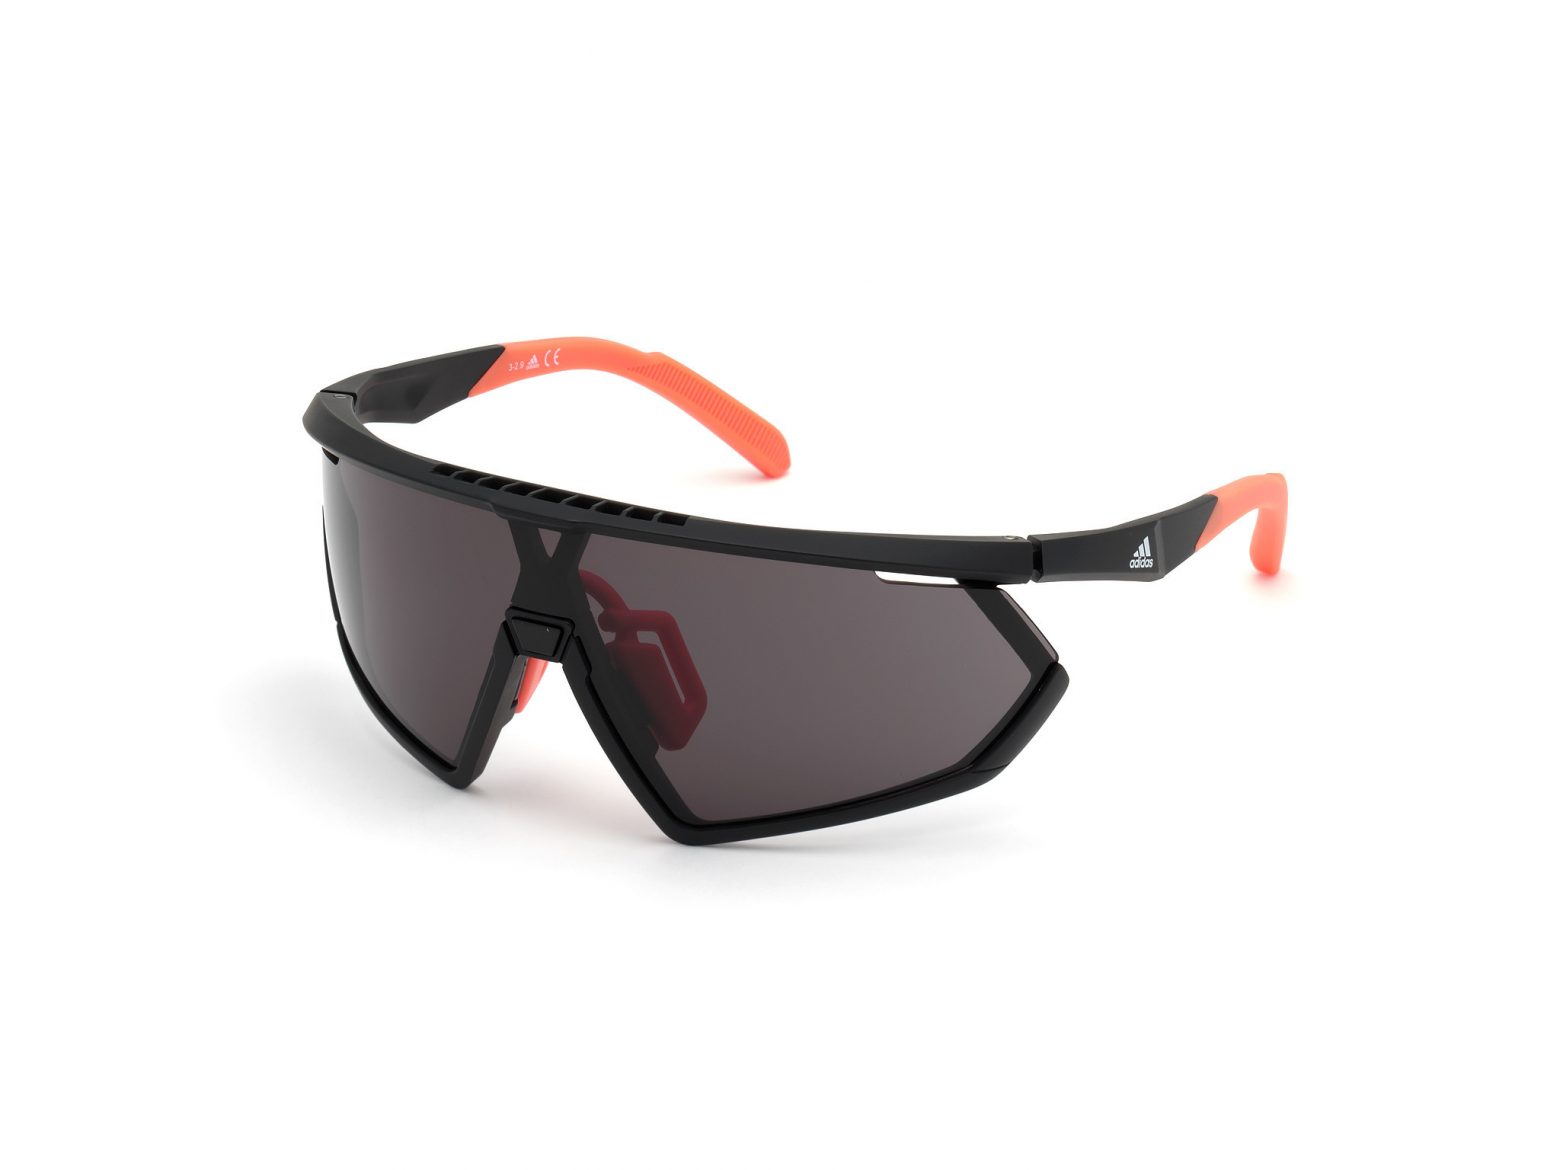 Incorrecto Leche Escandaloso Adidas SP0001 Sunglasses by Adidas | Shop Sunglasses